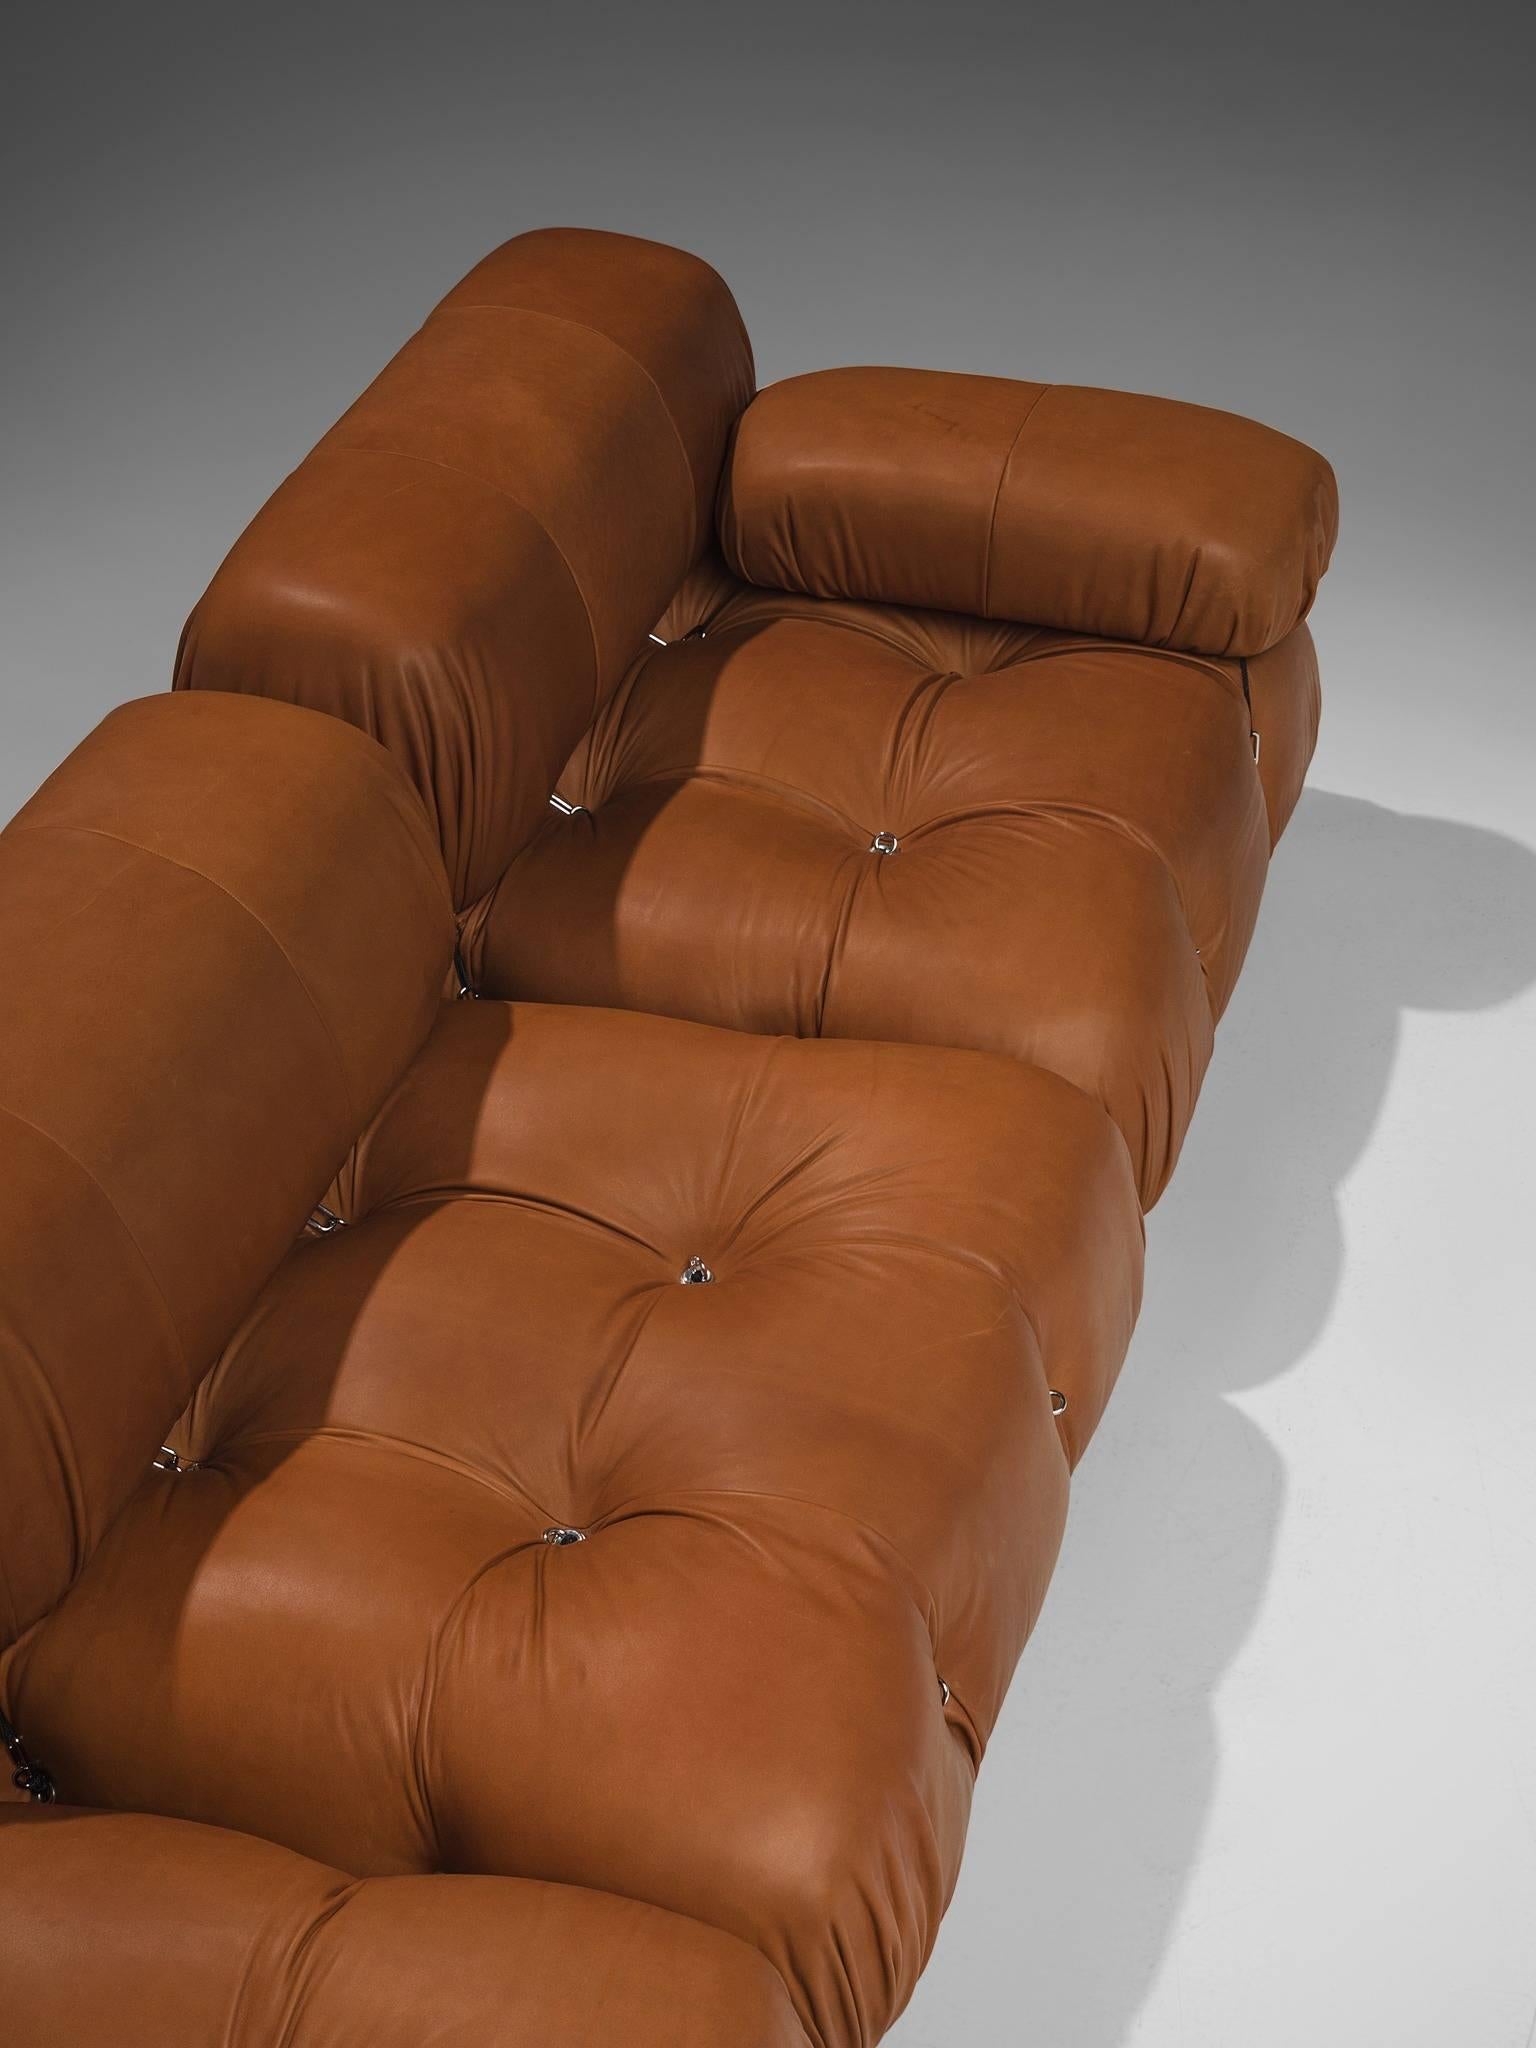 Italian Mario Bellini Customizable 'Camaleonda' Modular Leather Sofa